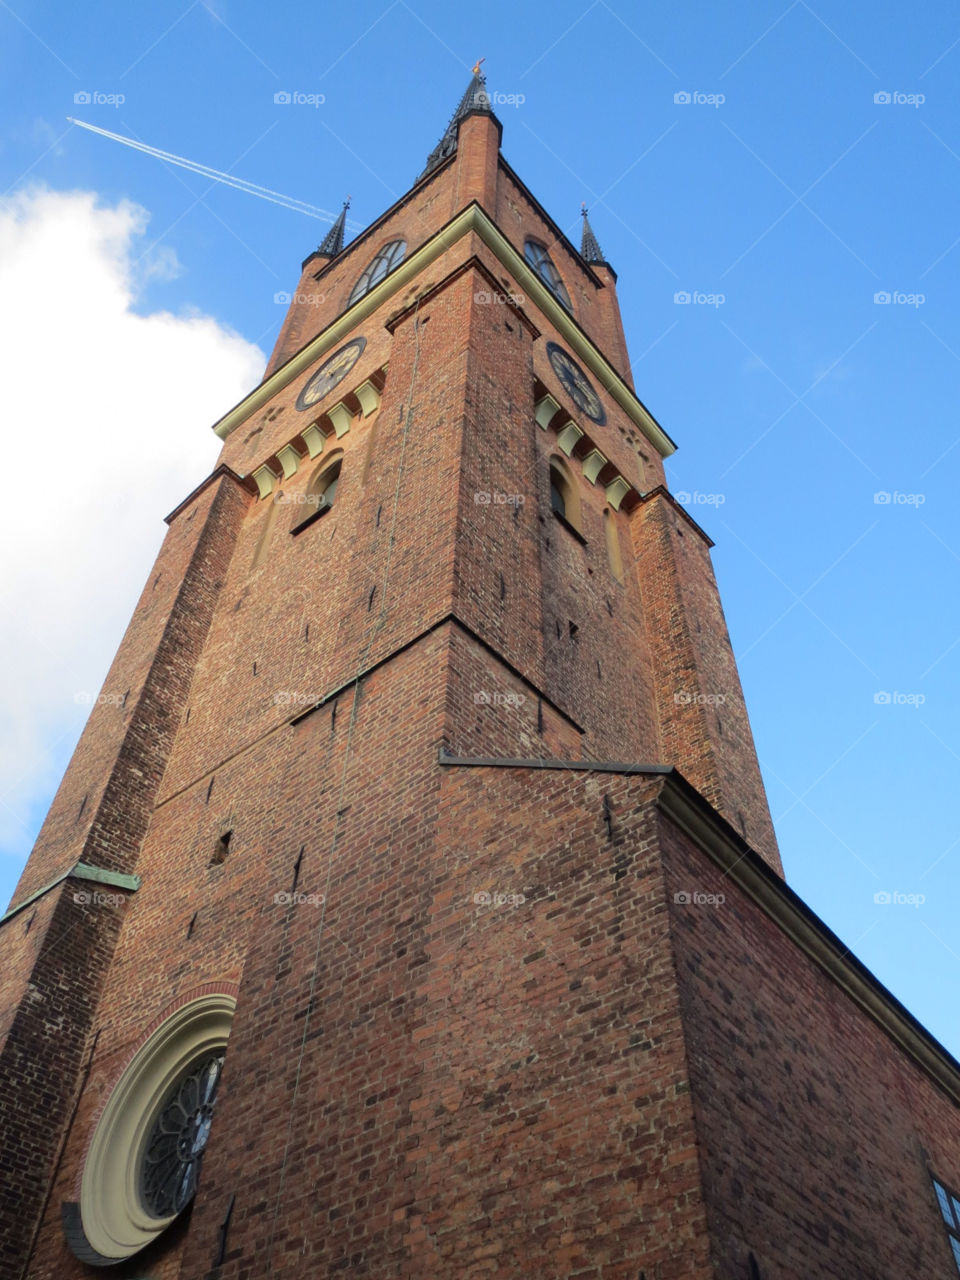 Churchtower at Riddarholmen, Stockholm